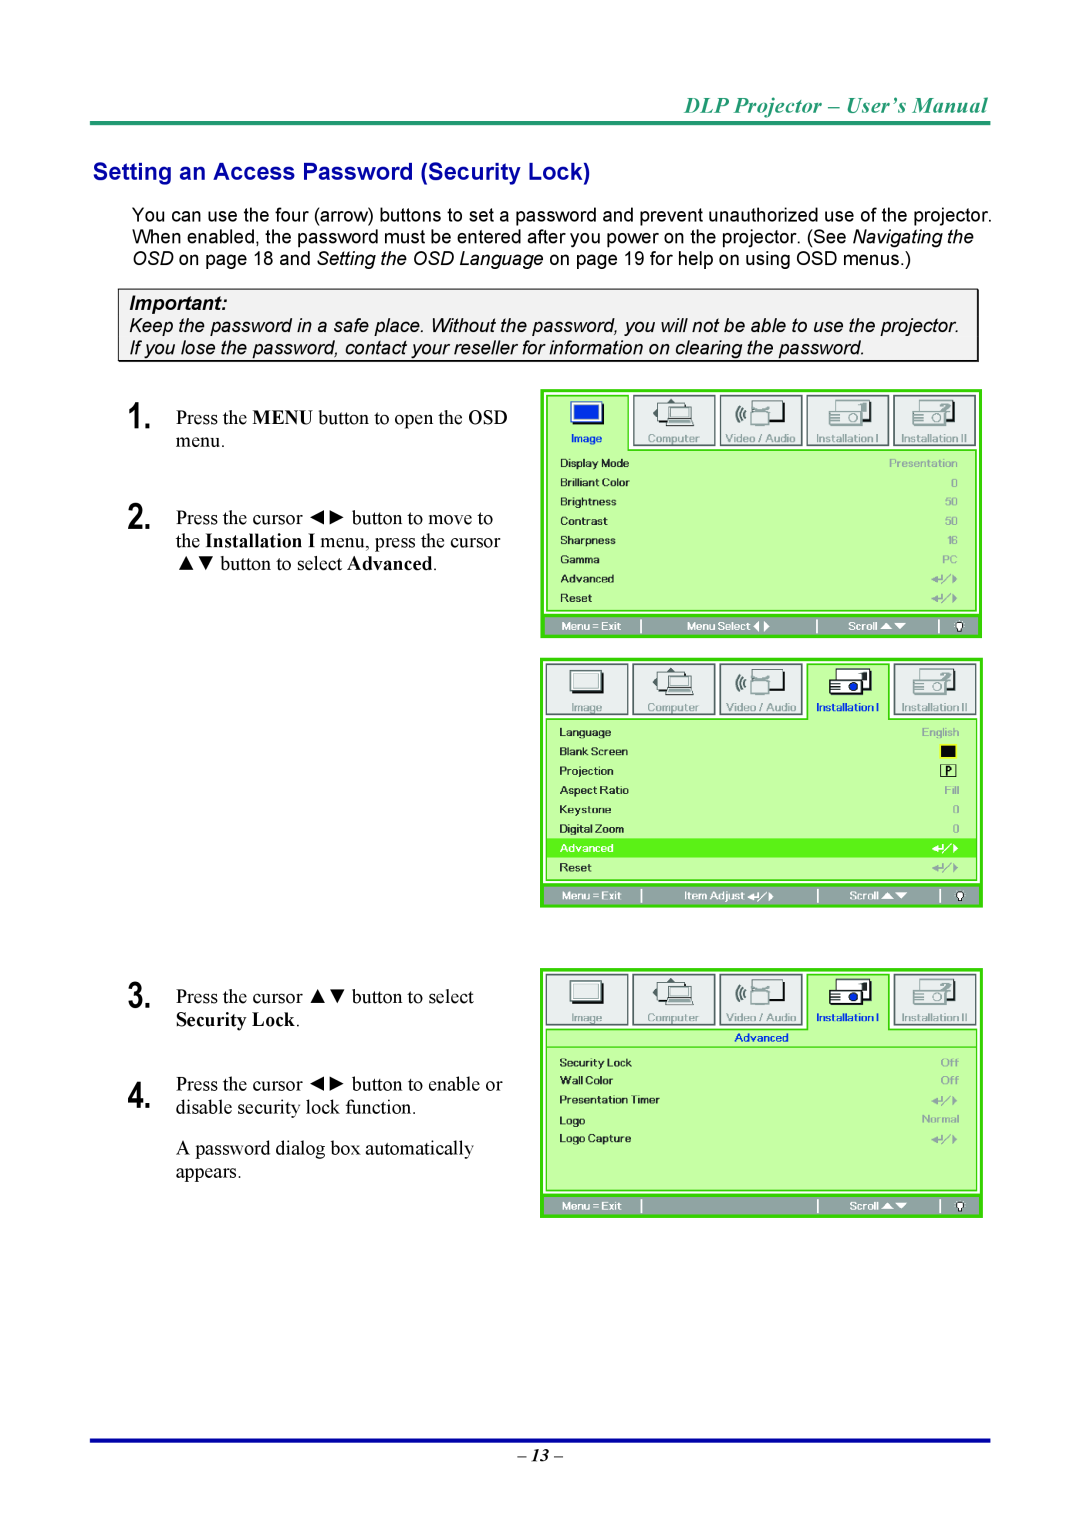 Vivitek D7 user manual Setting an Access Password Security Lock, DLP Projector - User’s Manual 